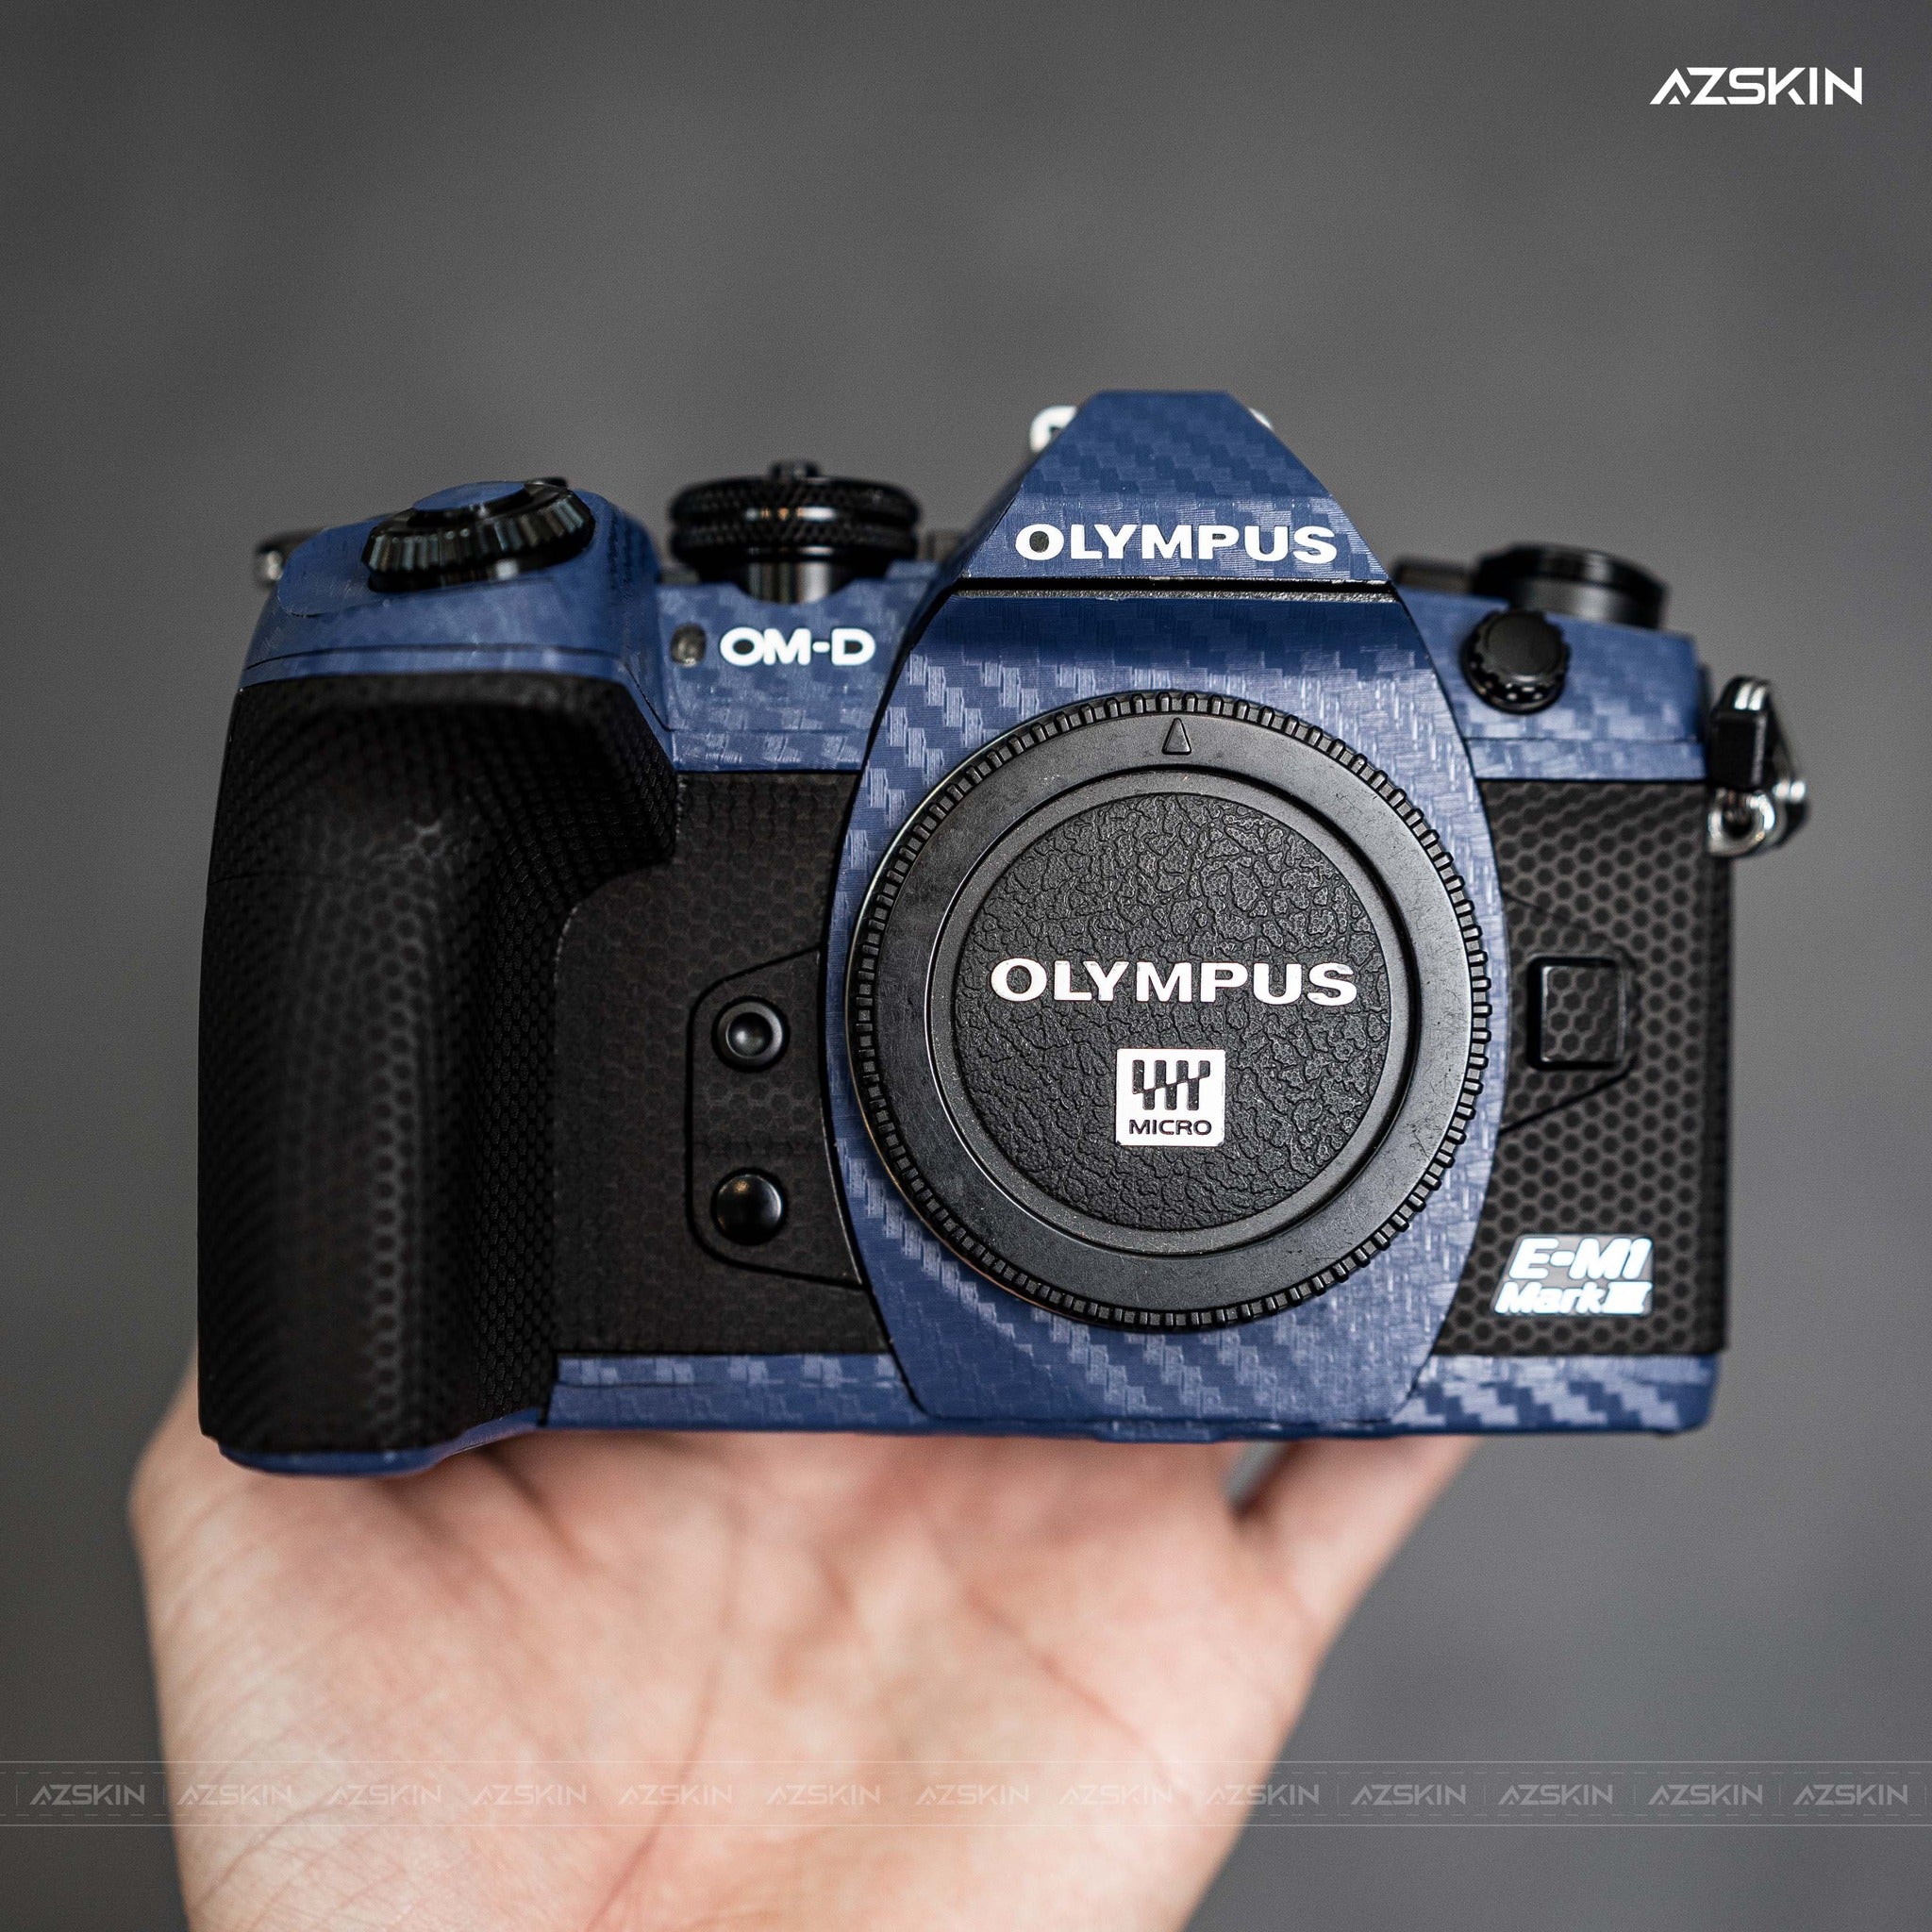 Skin máy ảnh Olympus thiết kế bởi Azskin